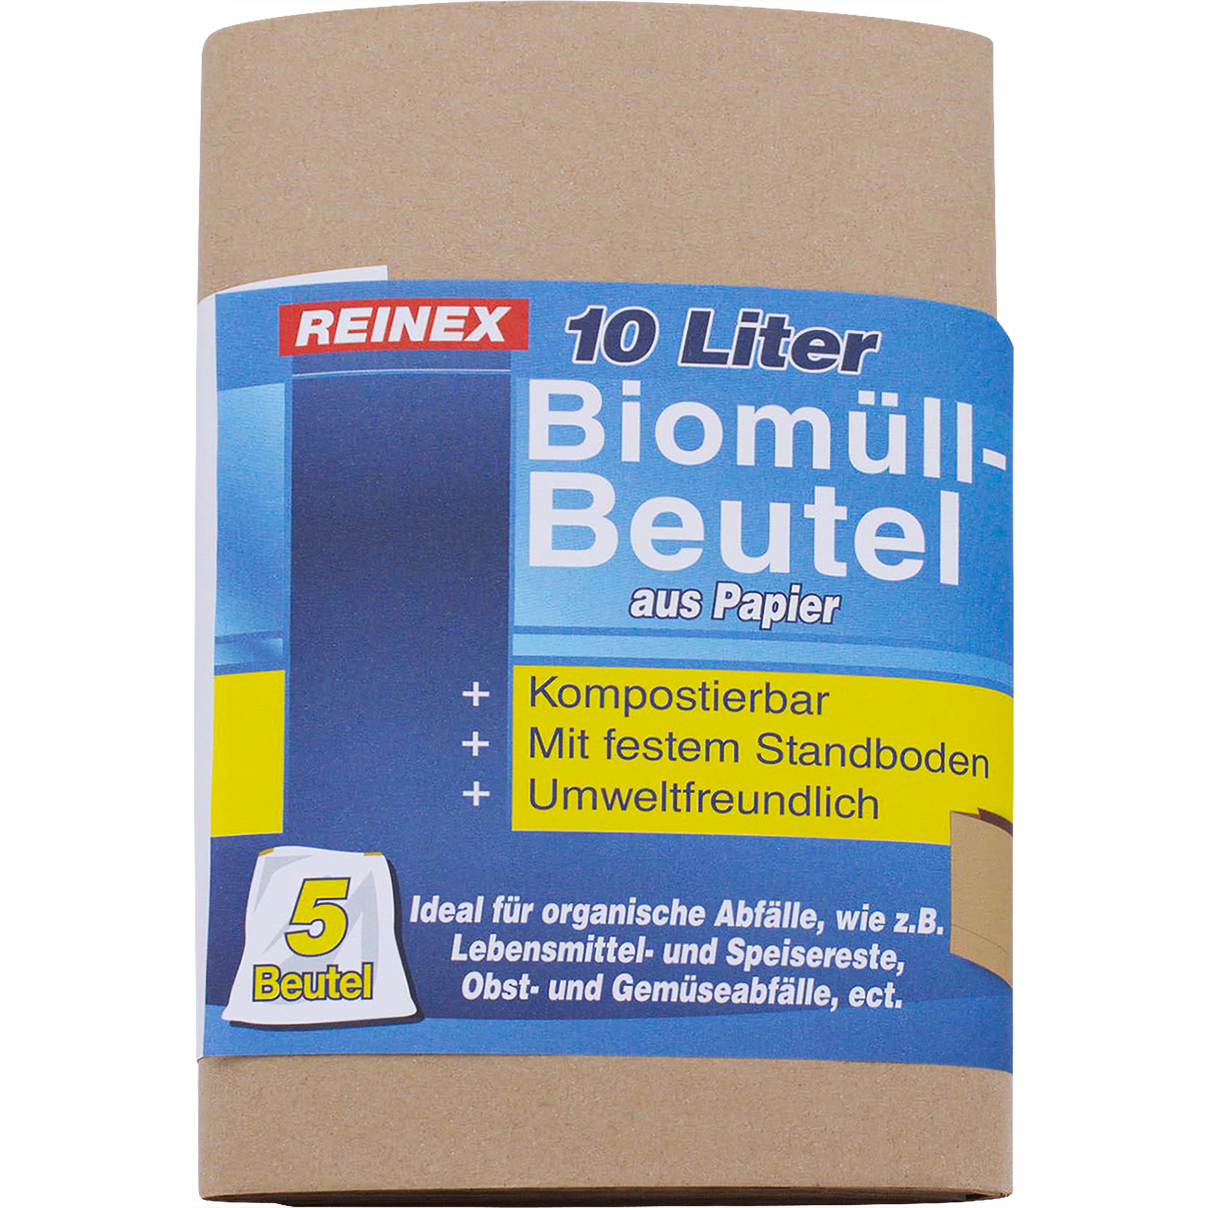 Reinex Biomüll-Beutel, Papier, 10 l, 5 Stück
